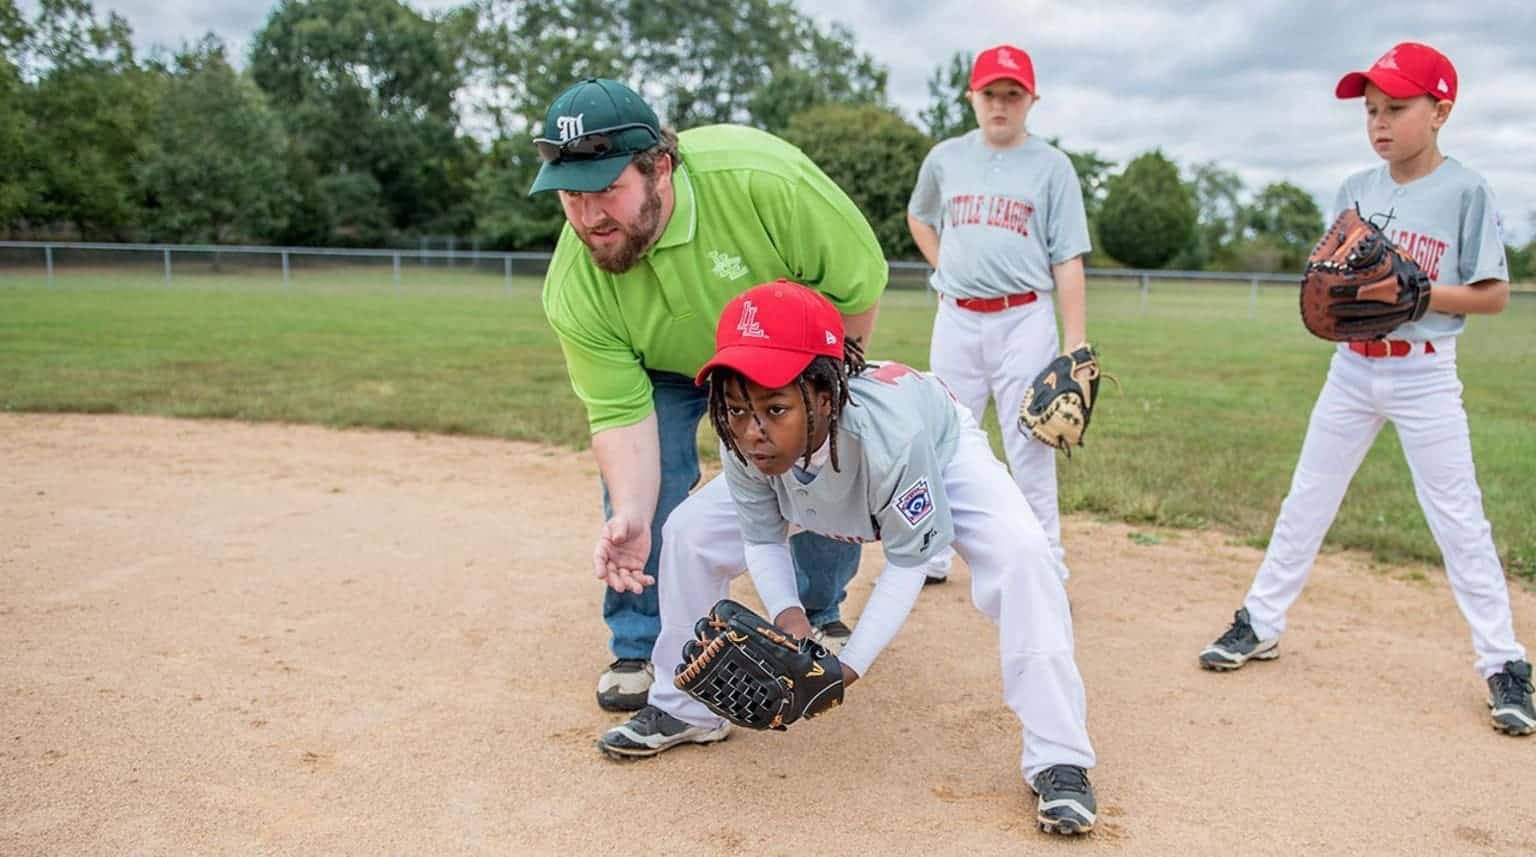 coaching ground balls to a youth baseball player